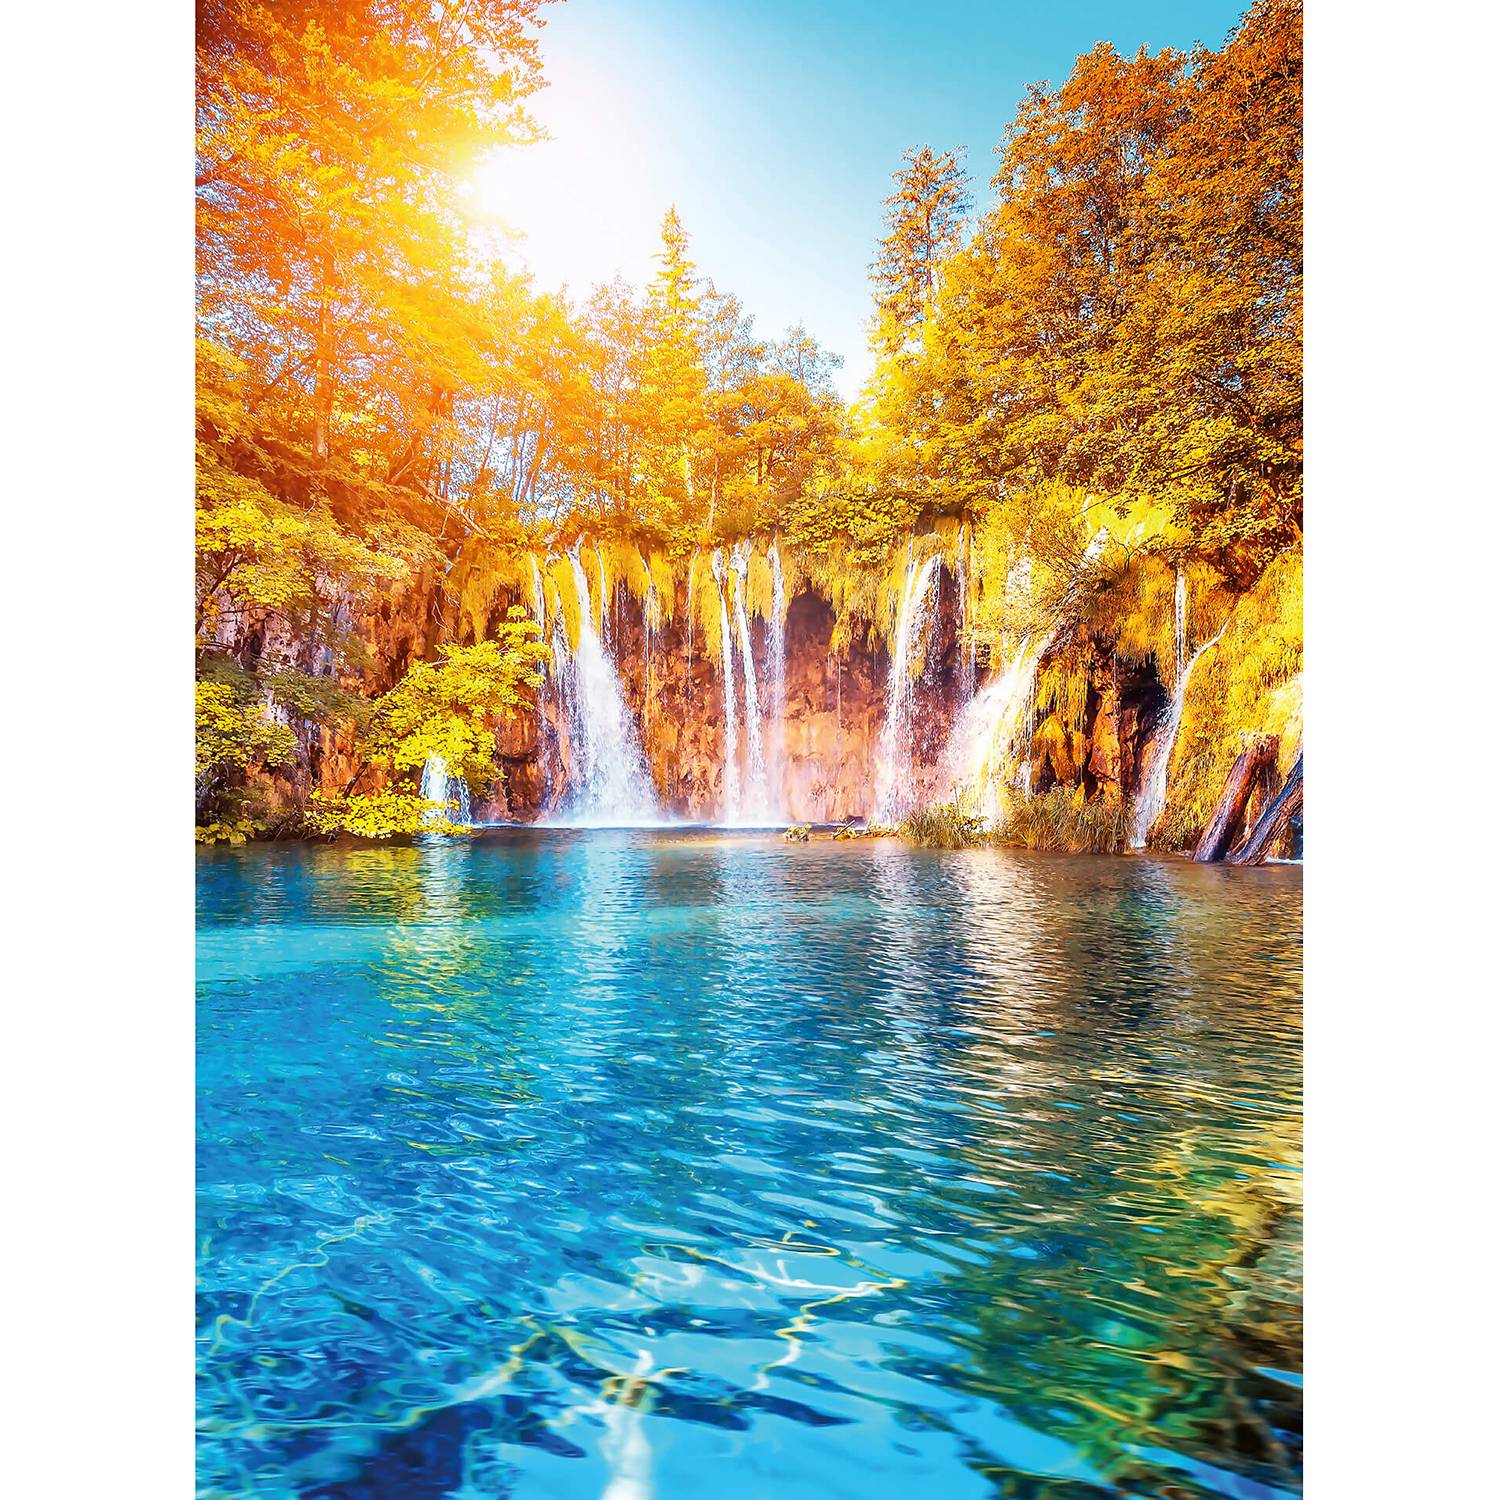 Fototapete Wasserfall Natur kaufen | home24